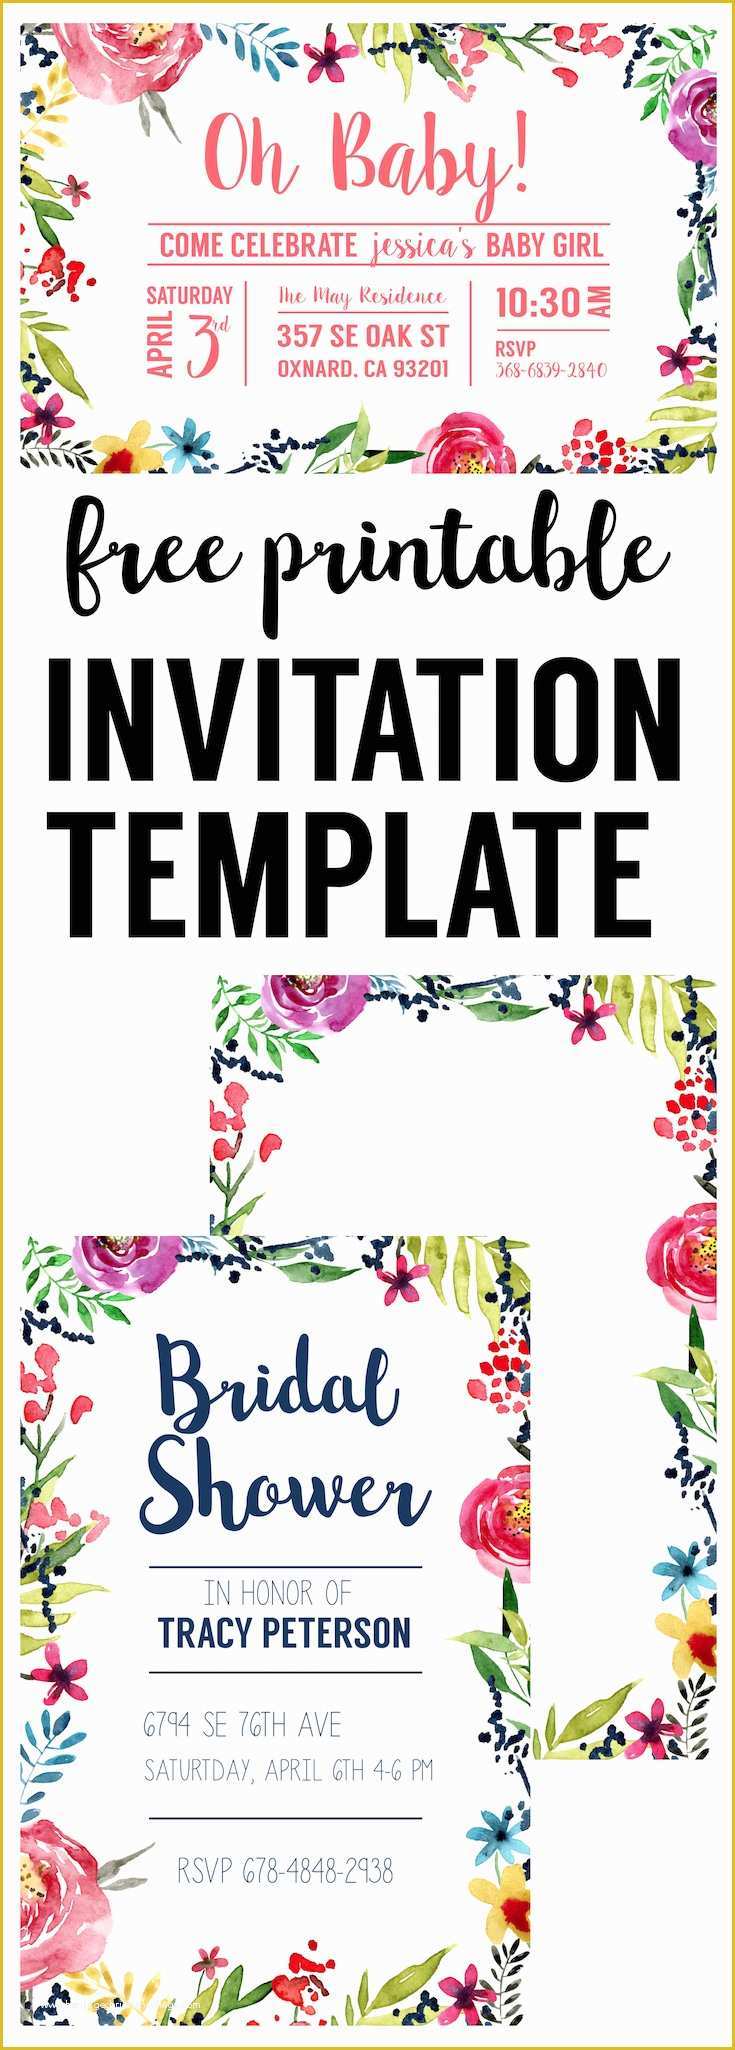 Free Bridal Shower Invitation Templates Of Floral Borders Invitations Free Printable Invitation